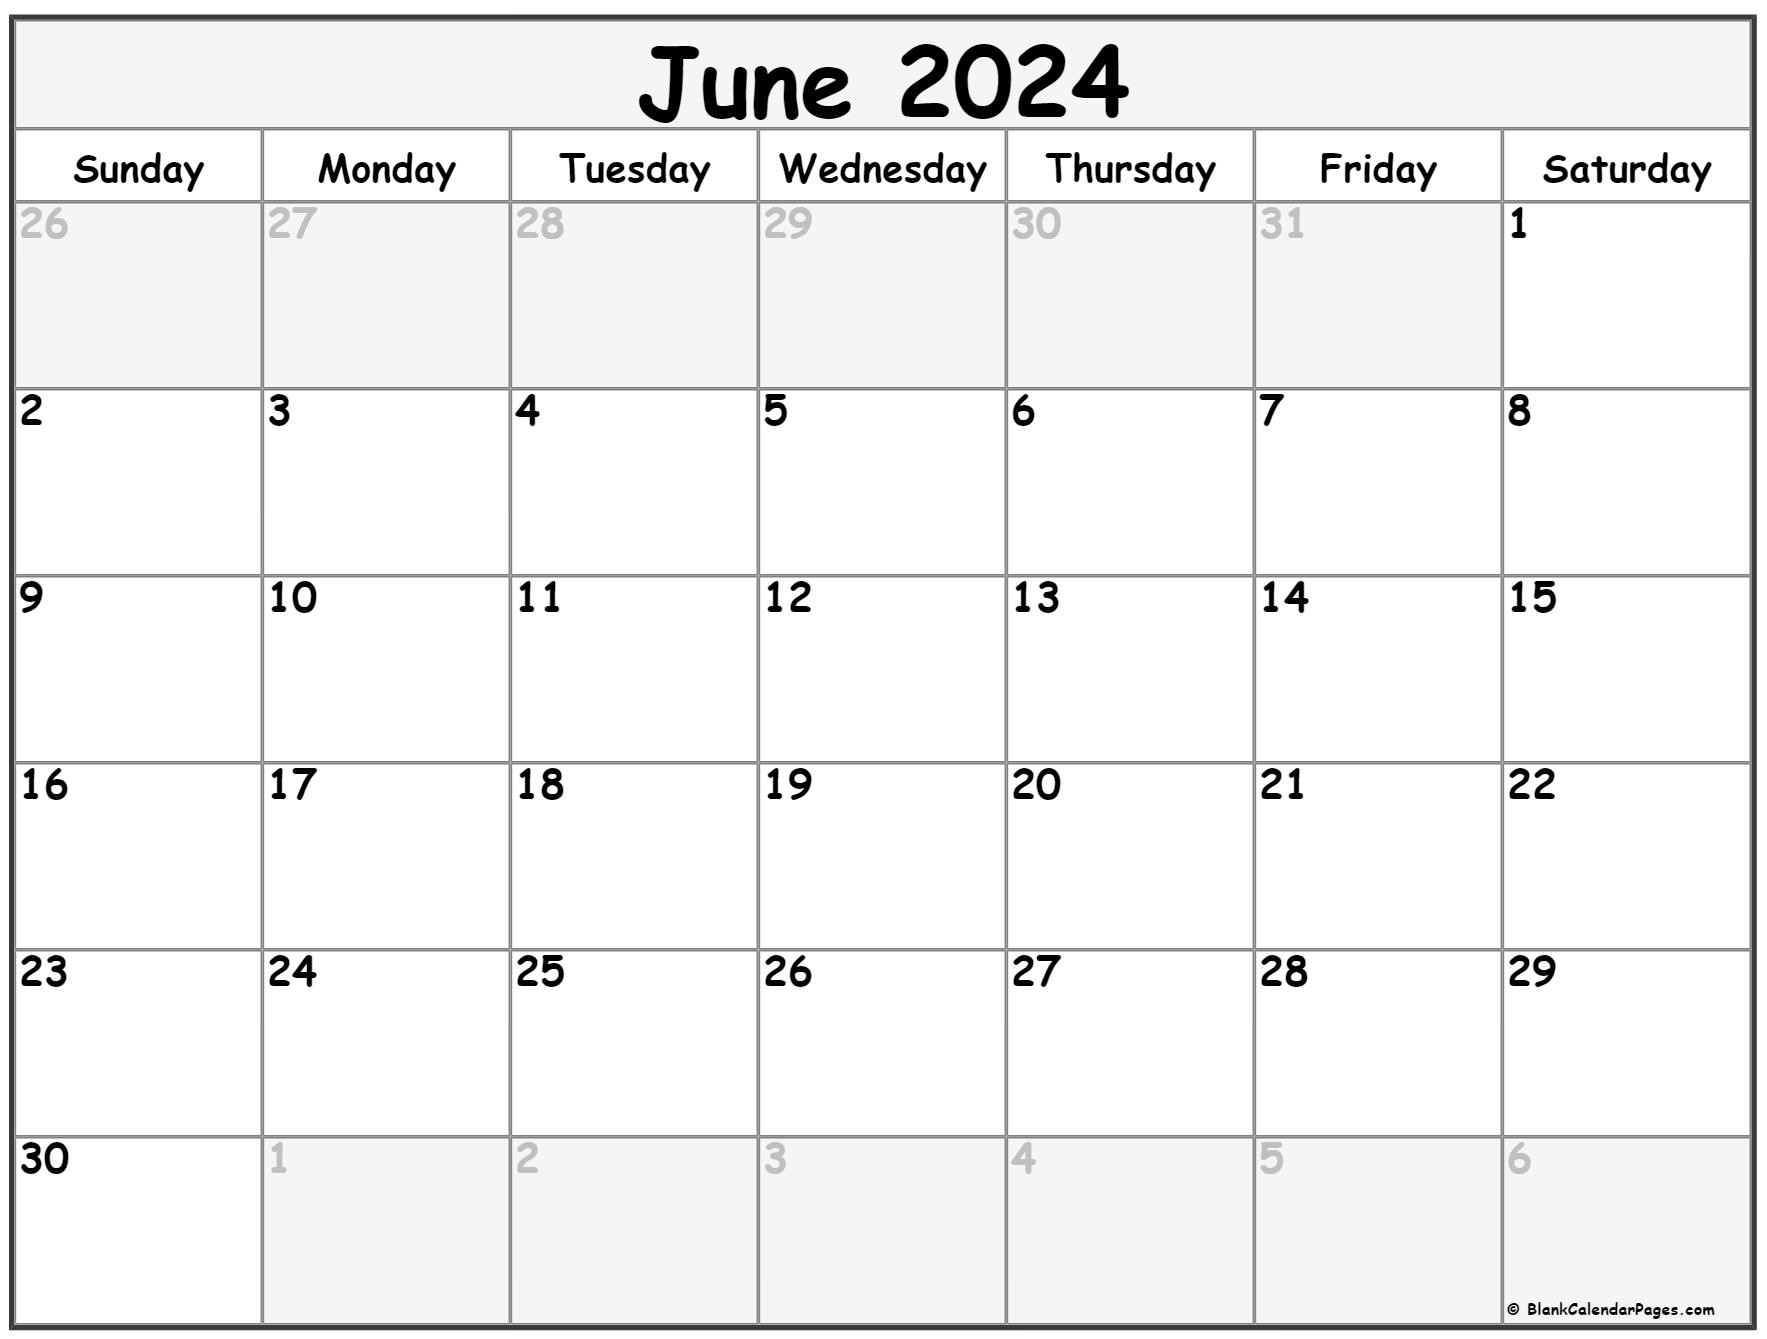 June 2024 Calendar | Free Printable Calendar for Free Printable Calendar June 2024